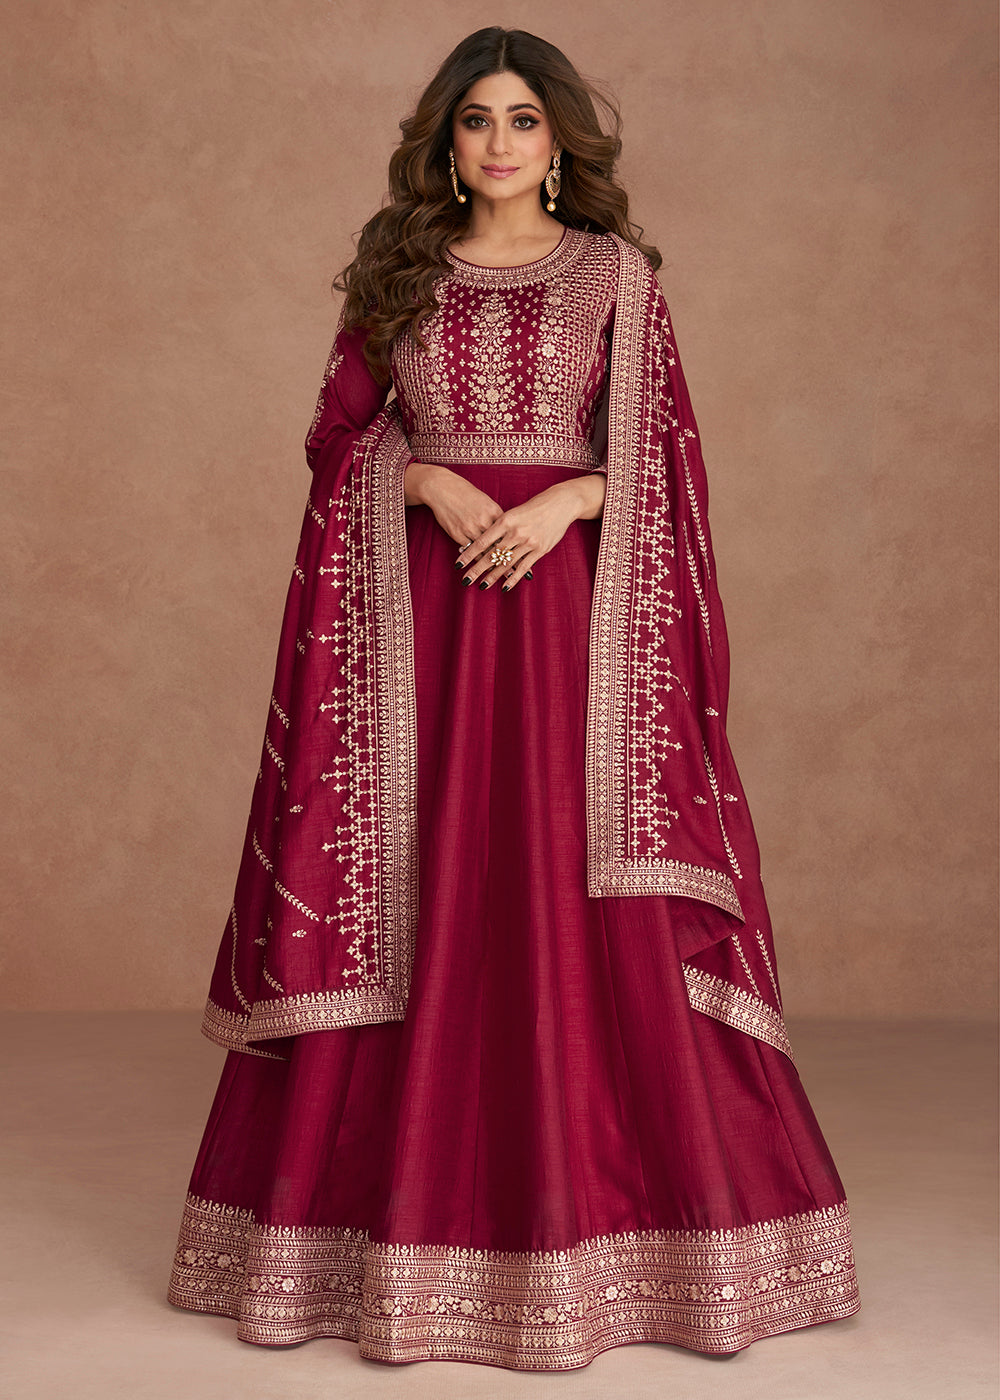 Buy Now Shamita Shetty Festive Crimson Pink Silk Anarkali Suit Online in USA, UK, Australia, New Zealand, Canada, Italy & Worldwide at Empress Clothing. 